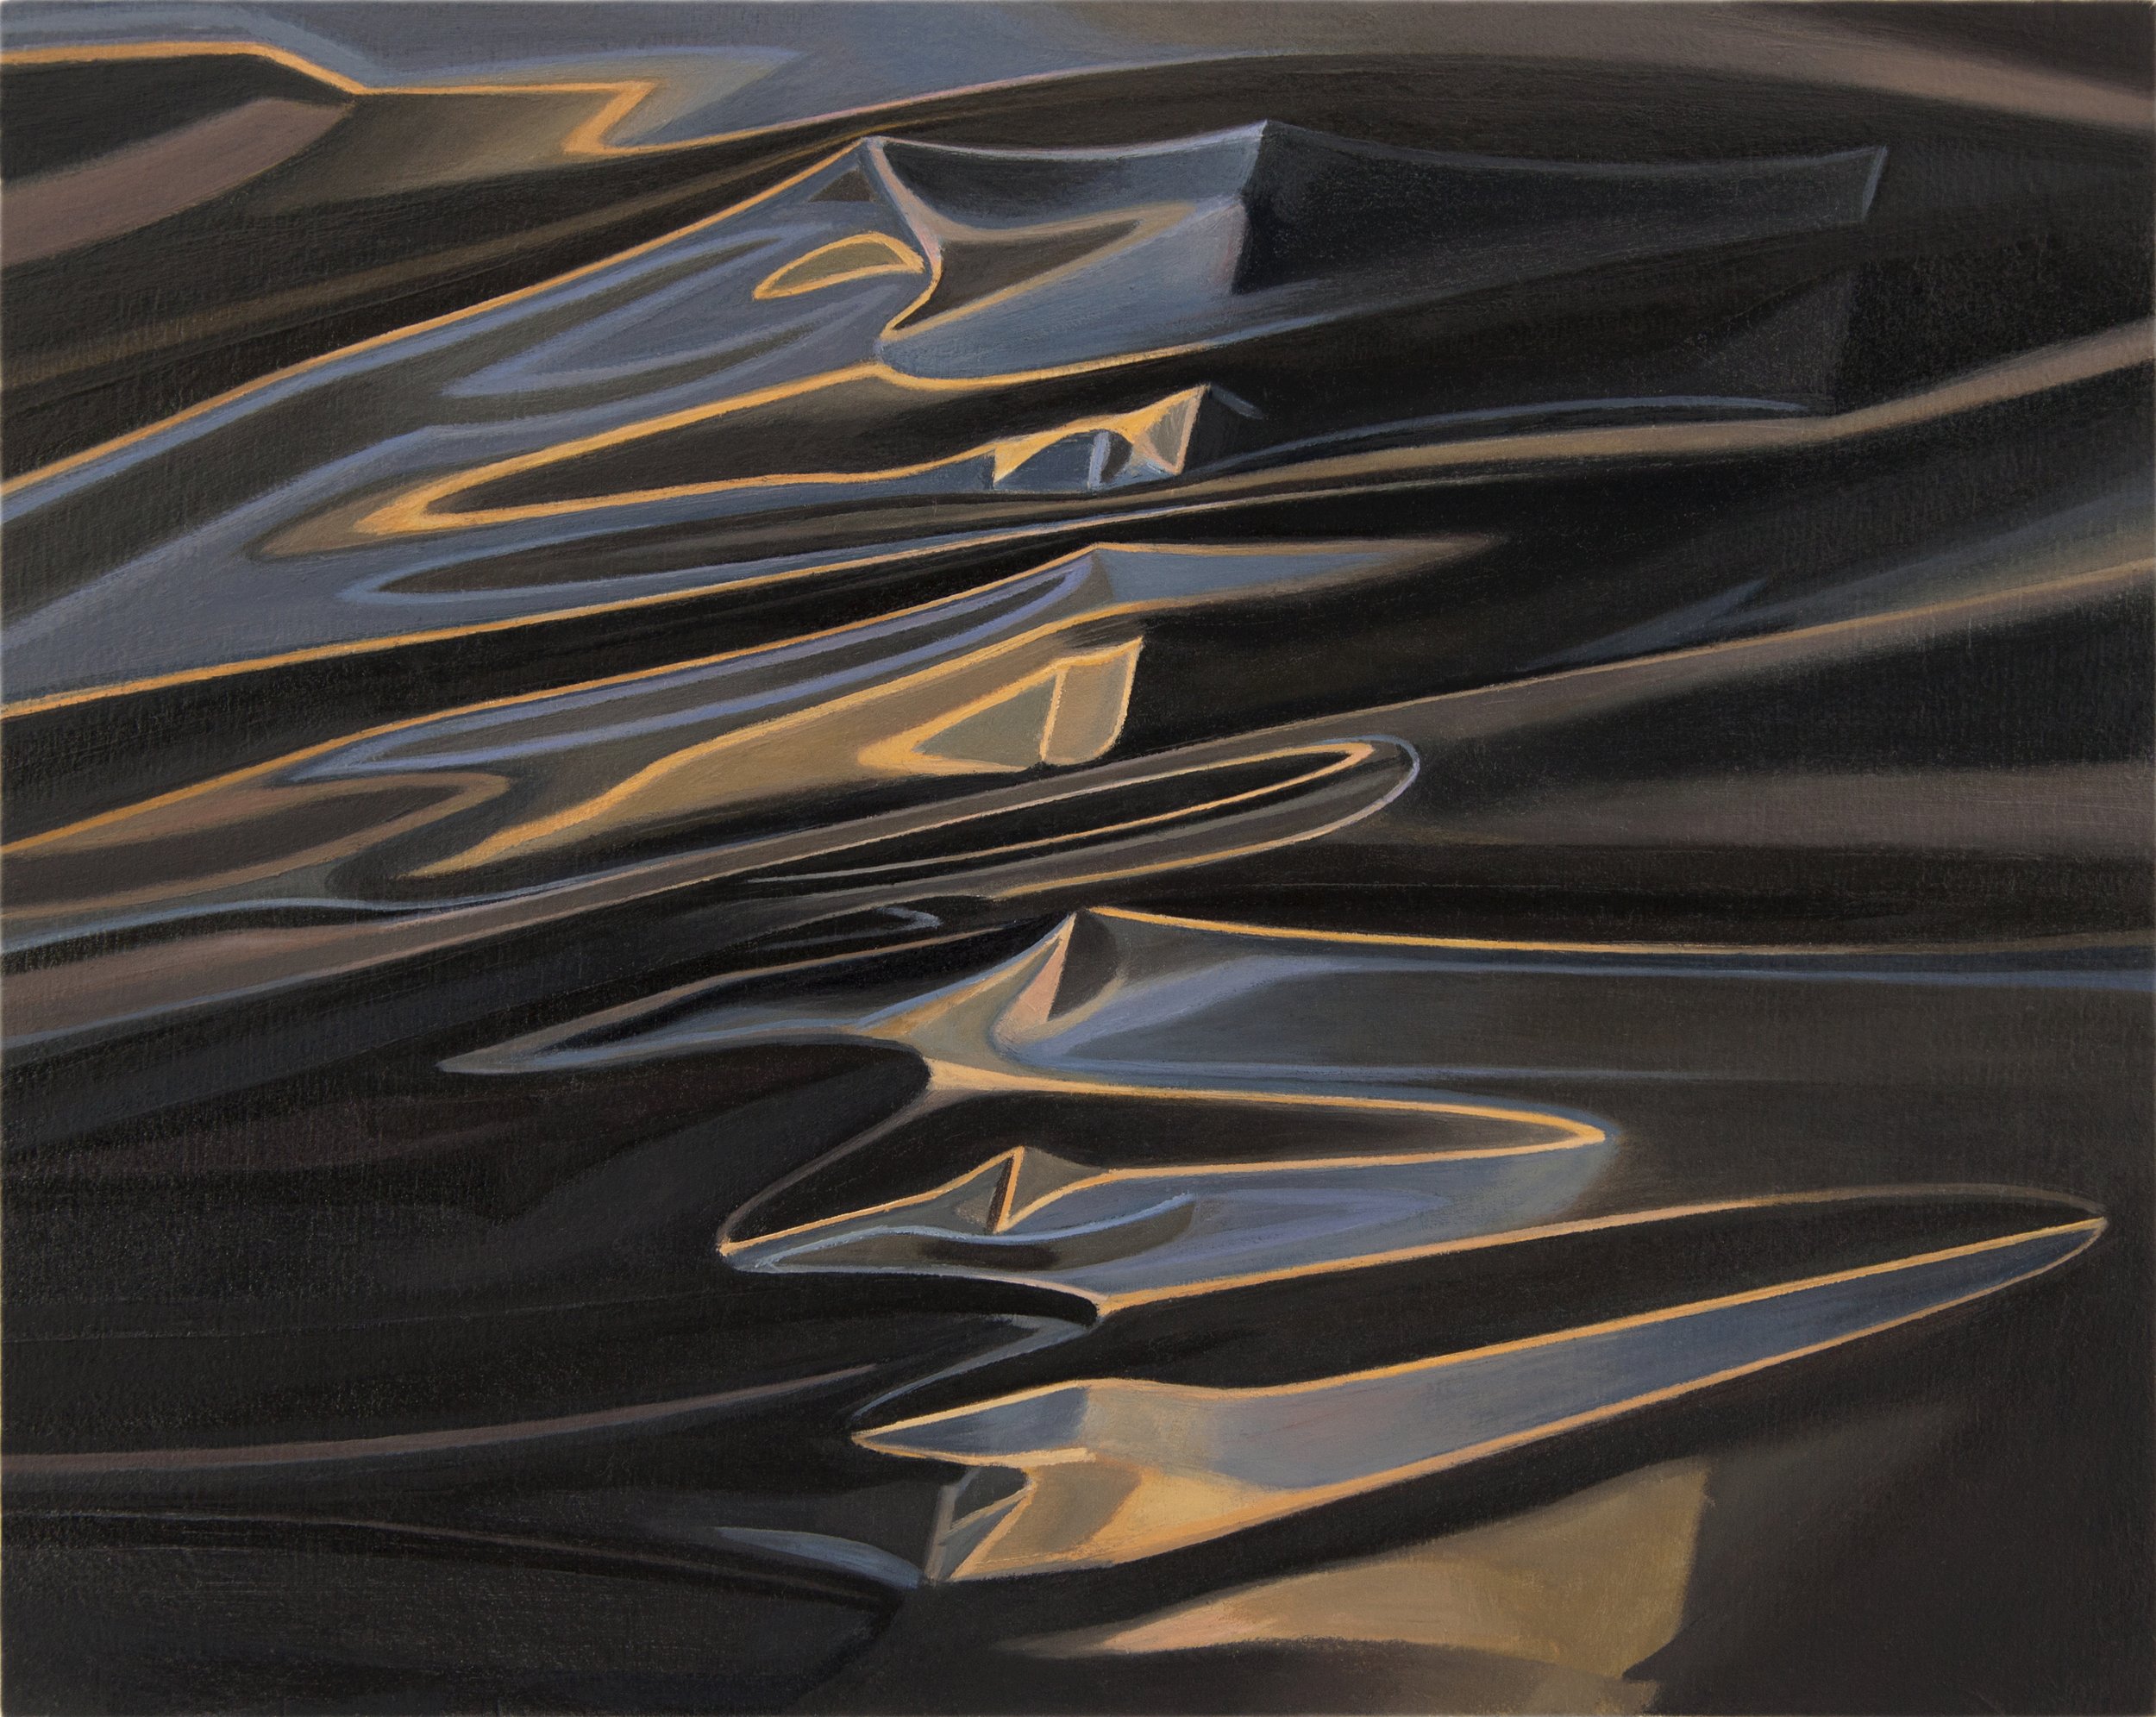  Plastic, Sunny  8x10”, oil on panel, 2015   